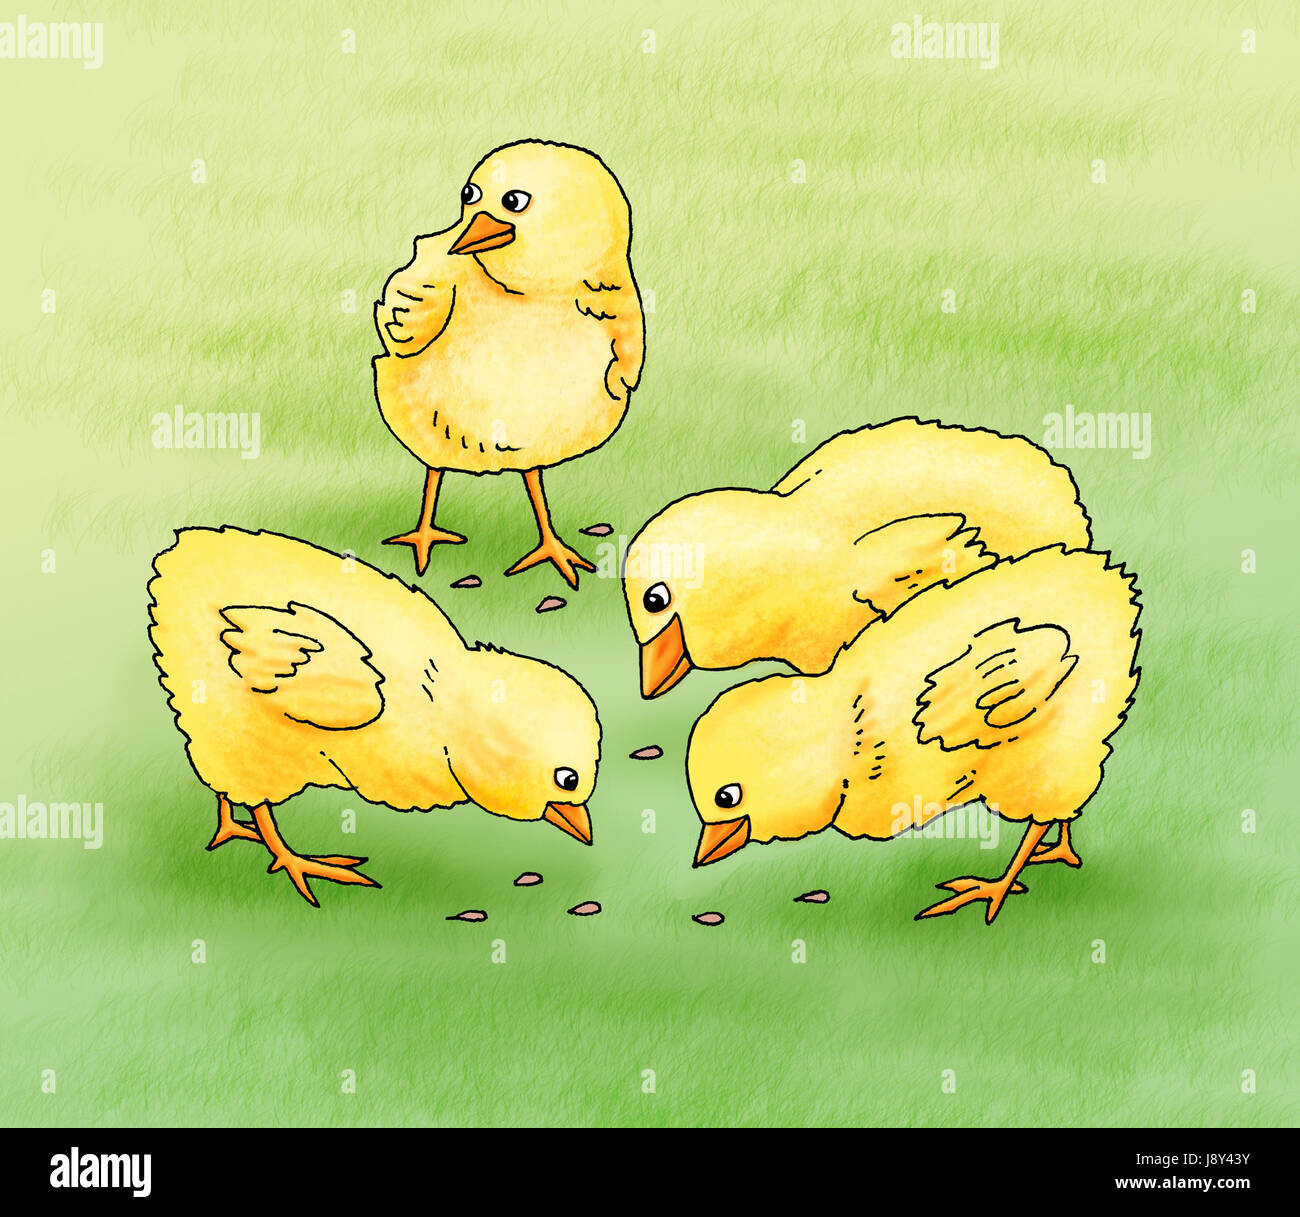 Feeding of chicks - jpg illustration Stock Photo